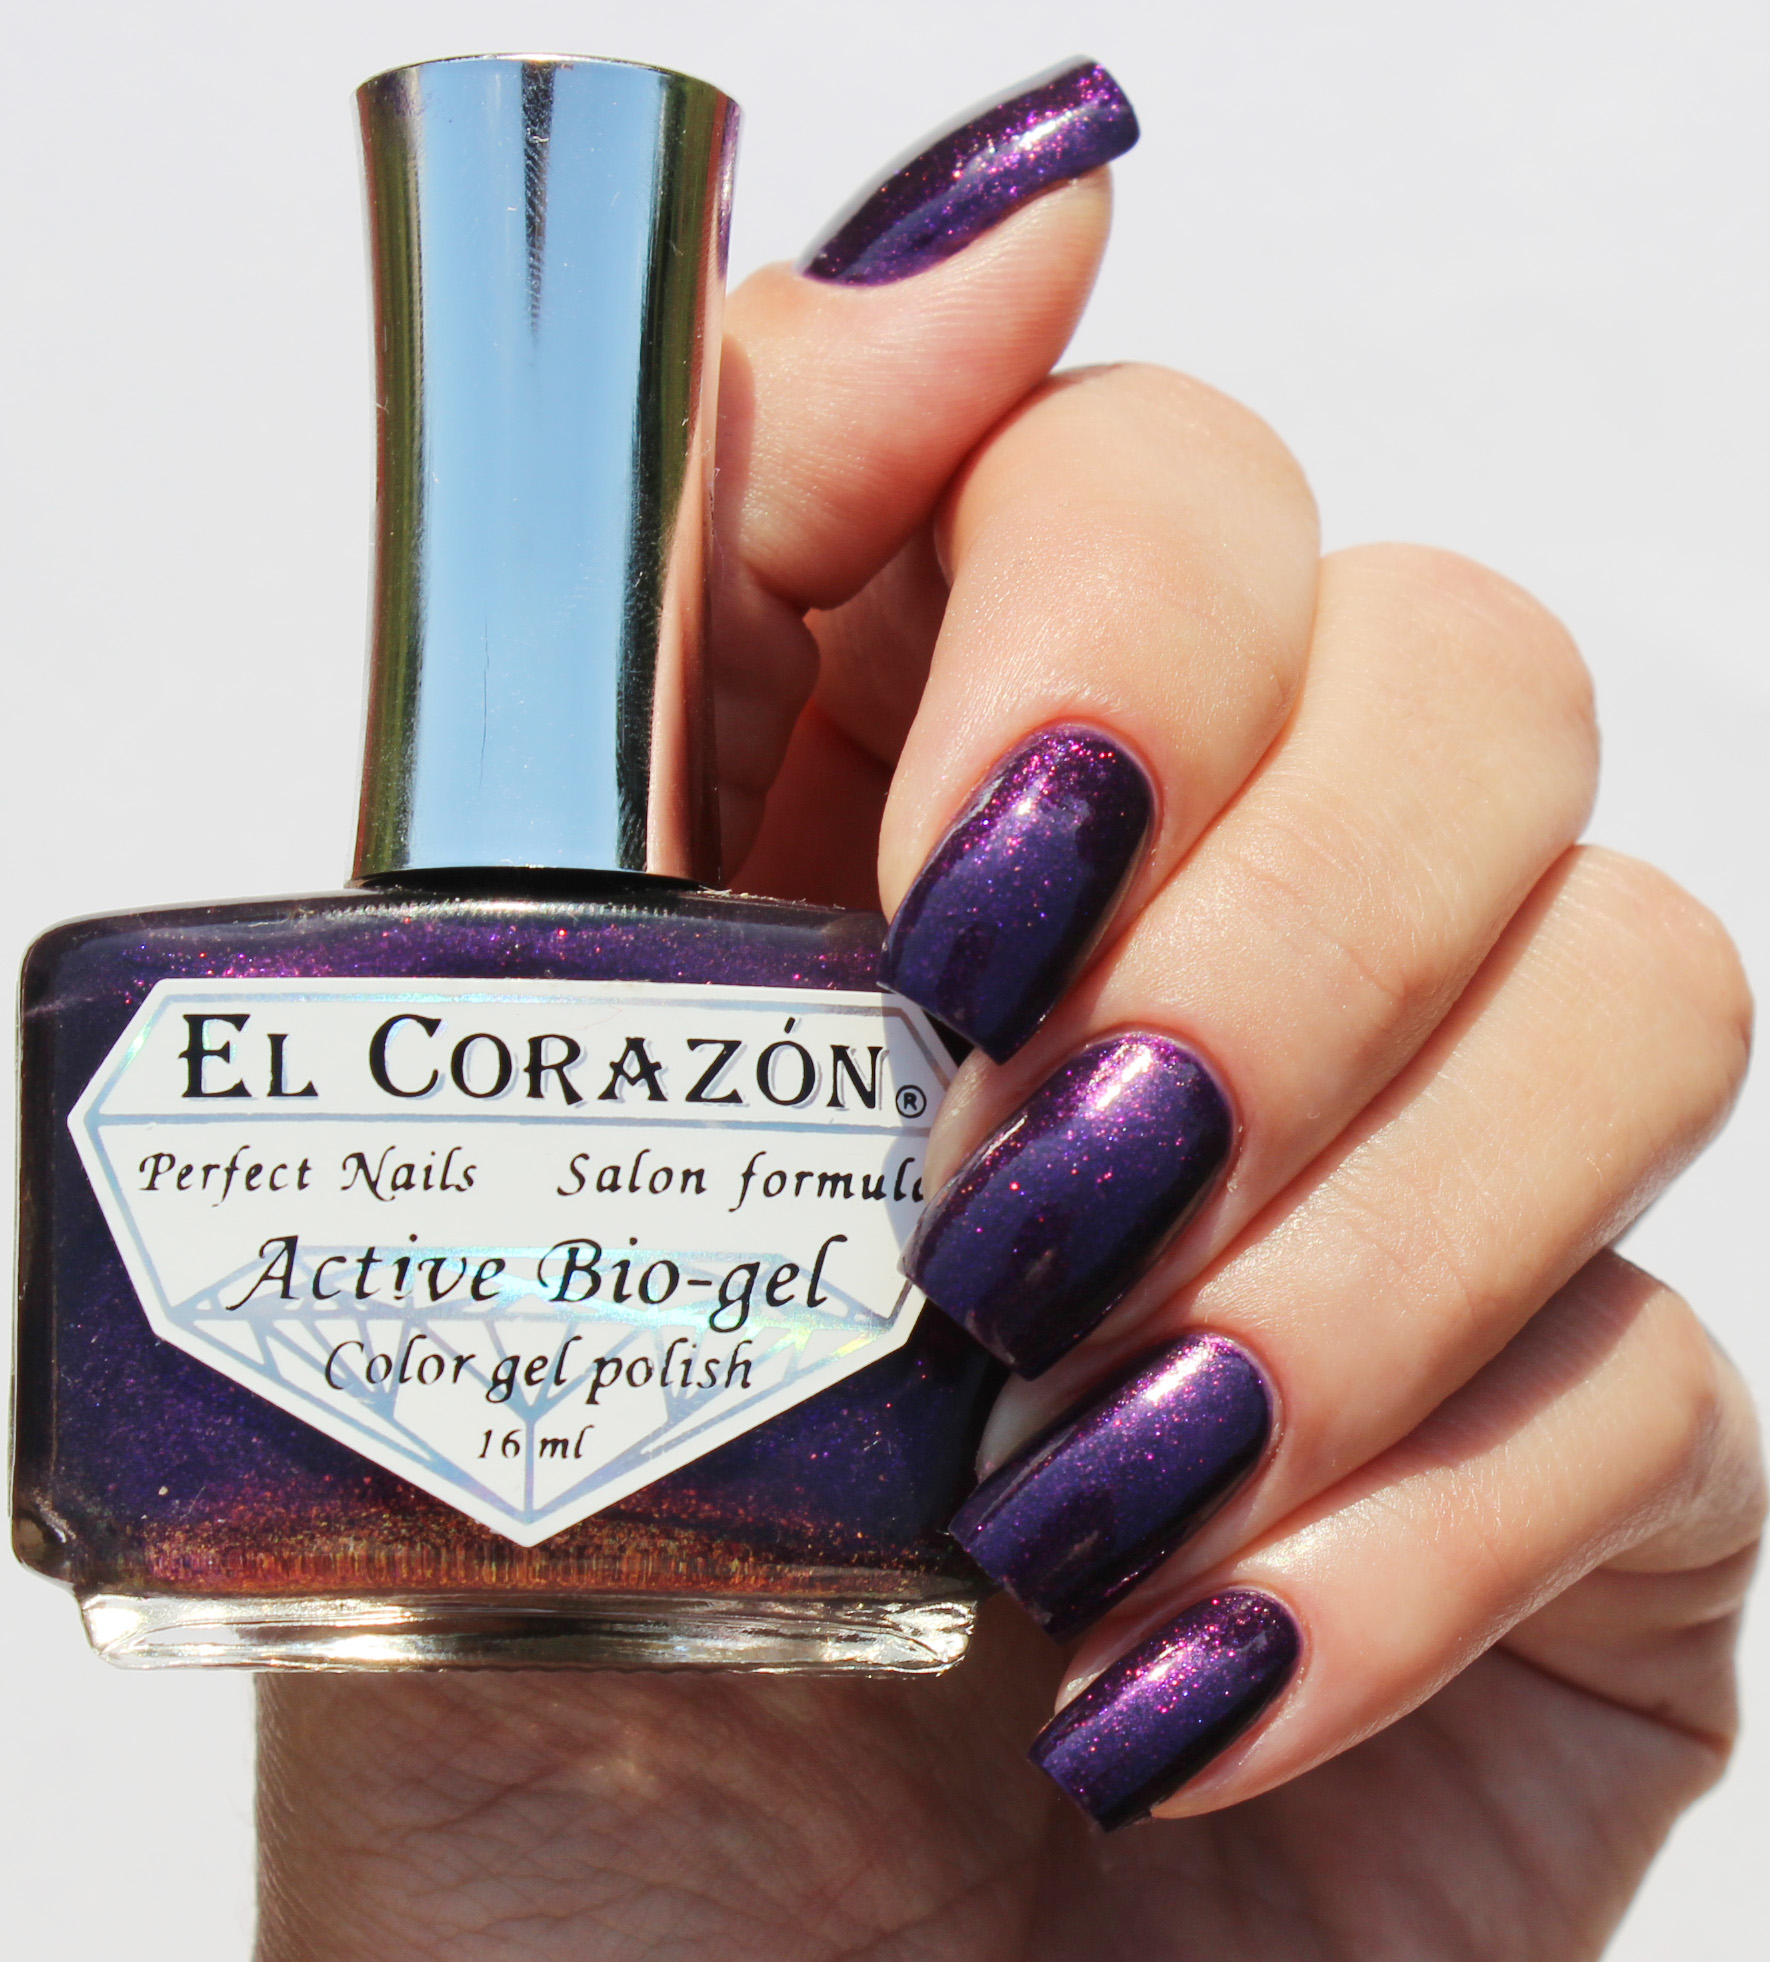 EL Corazon Active Bio-gel Color gel polish Magic №423/580 Magic of the Arabian Nights